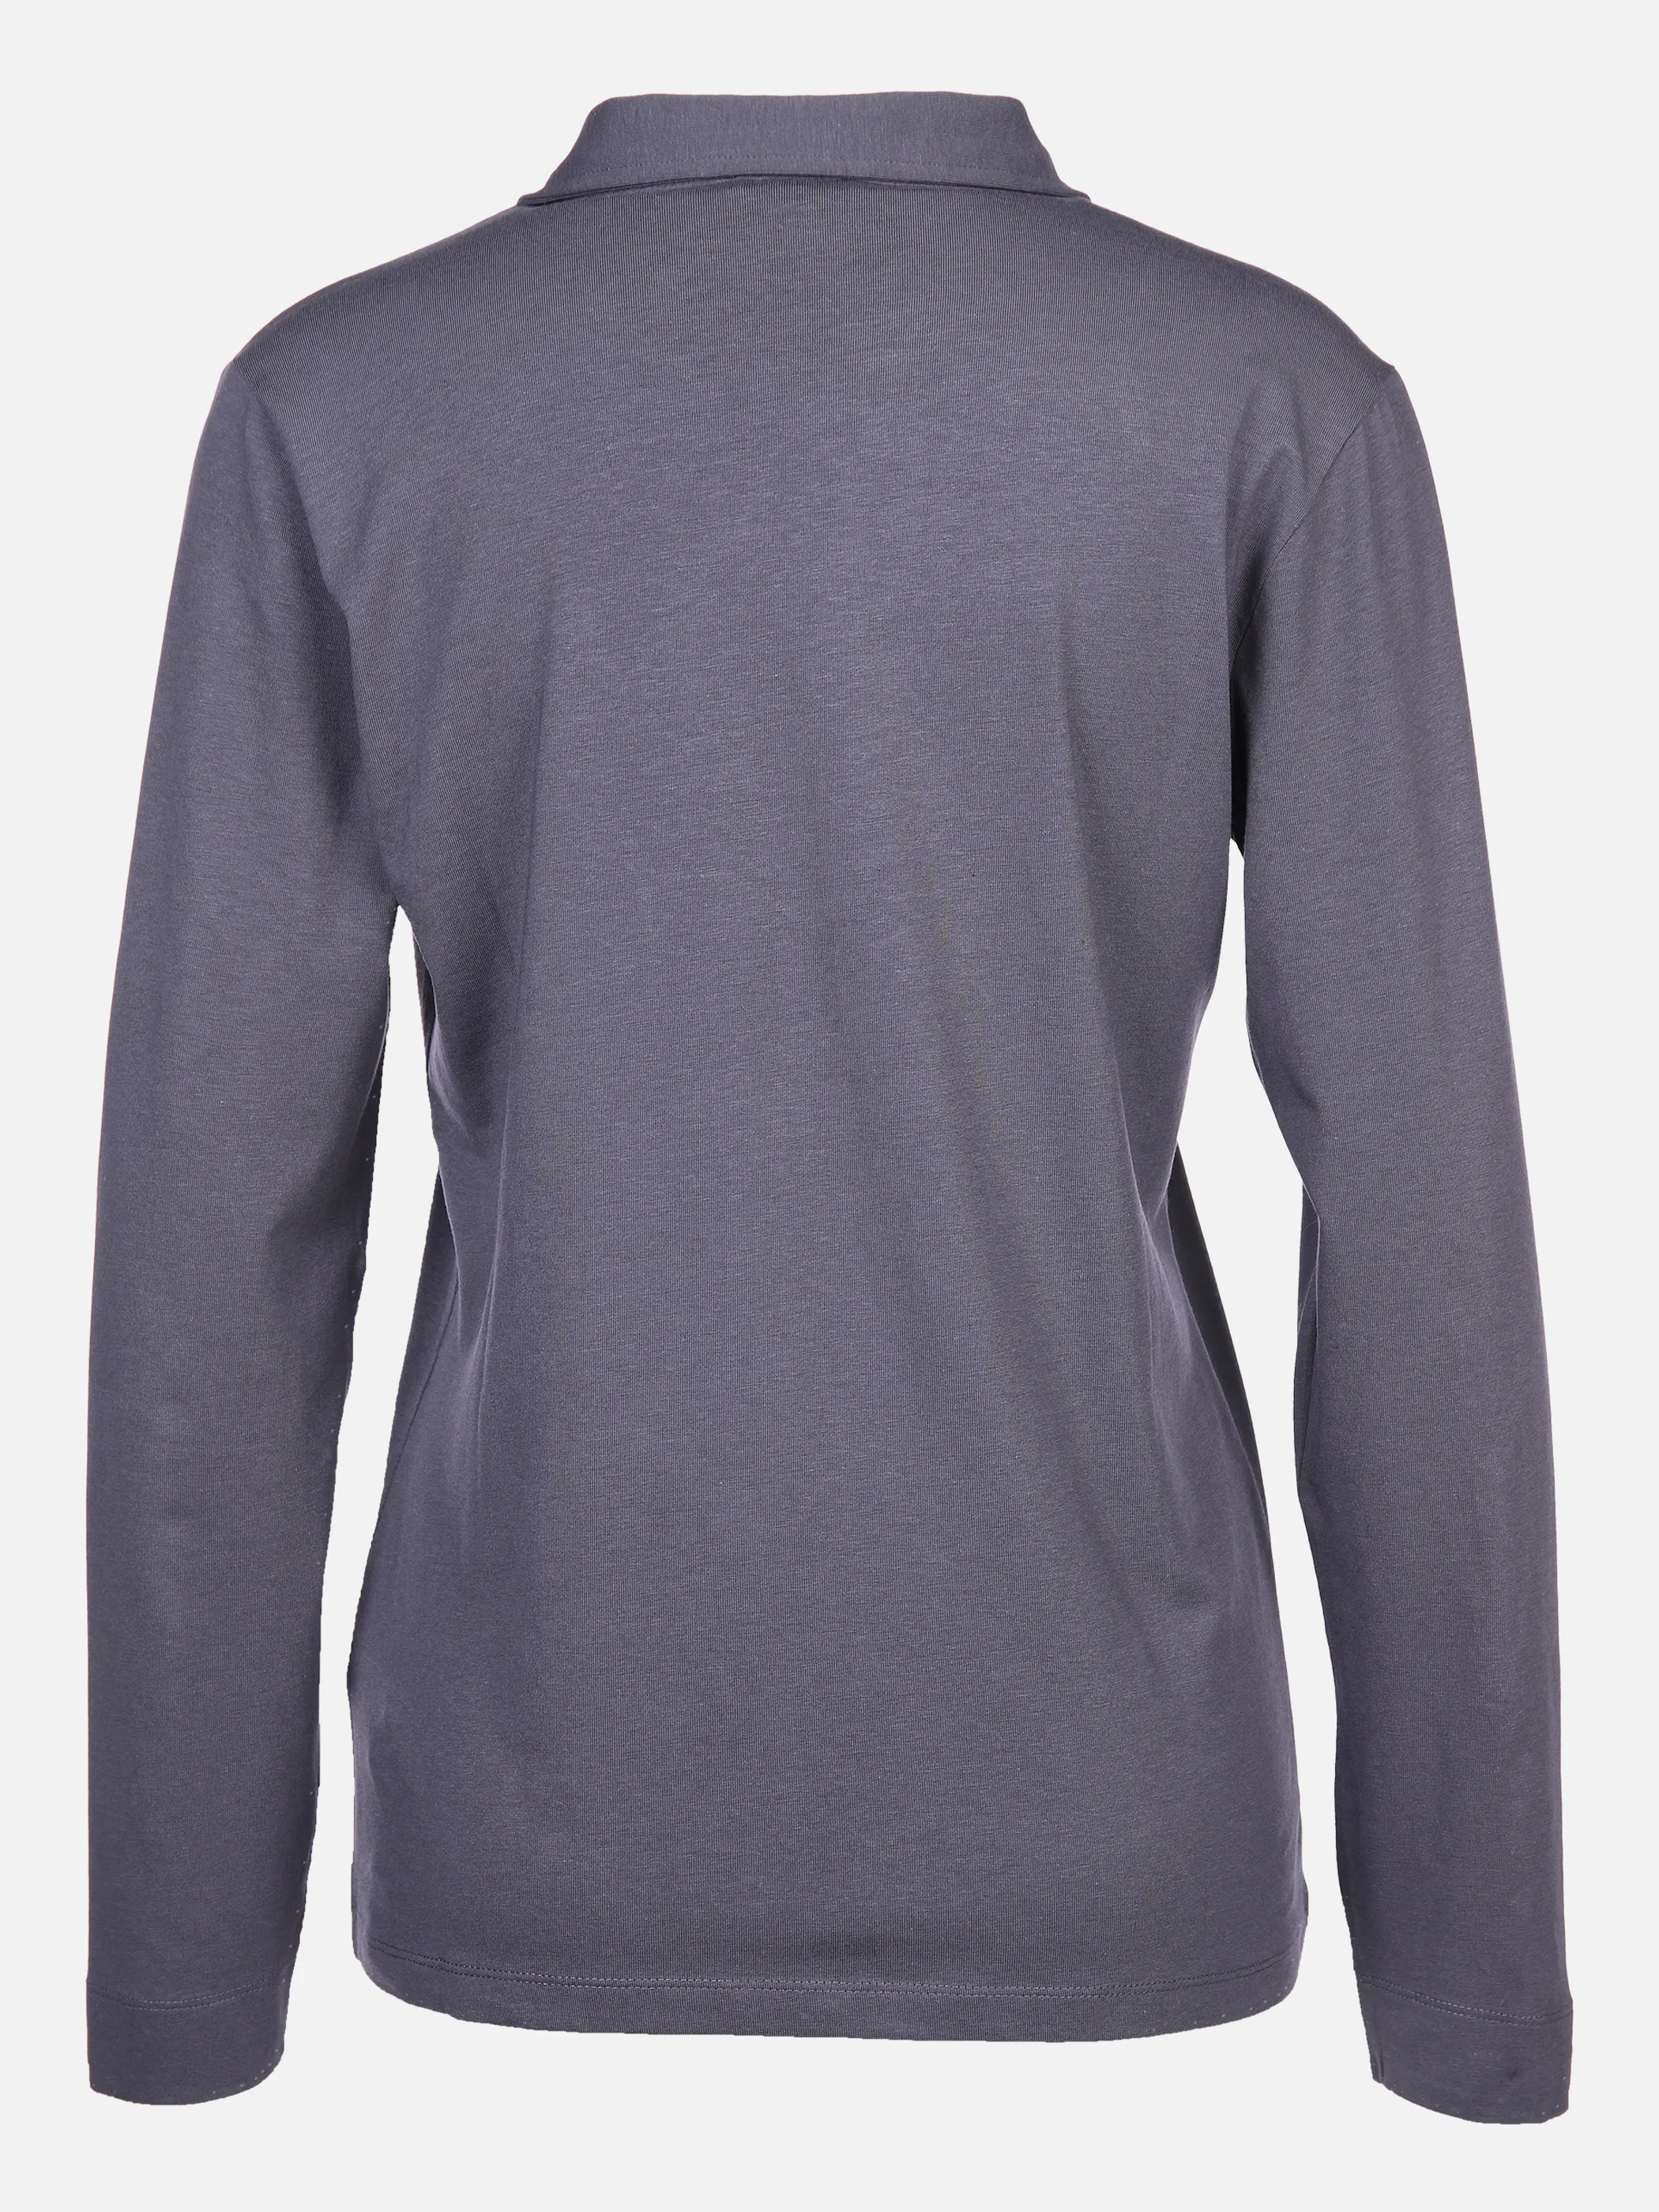 Tom Tailor 1032711 blouse T-shirt Grau 869450 15417 2